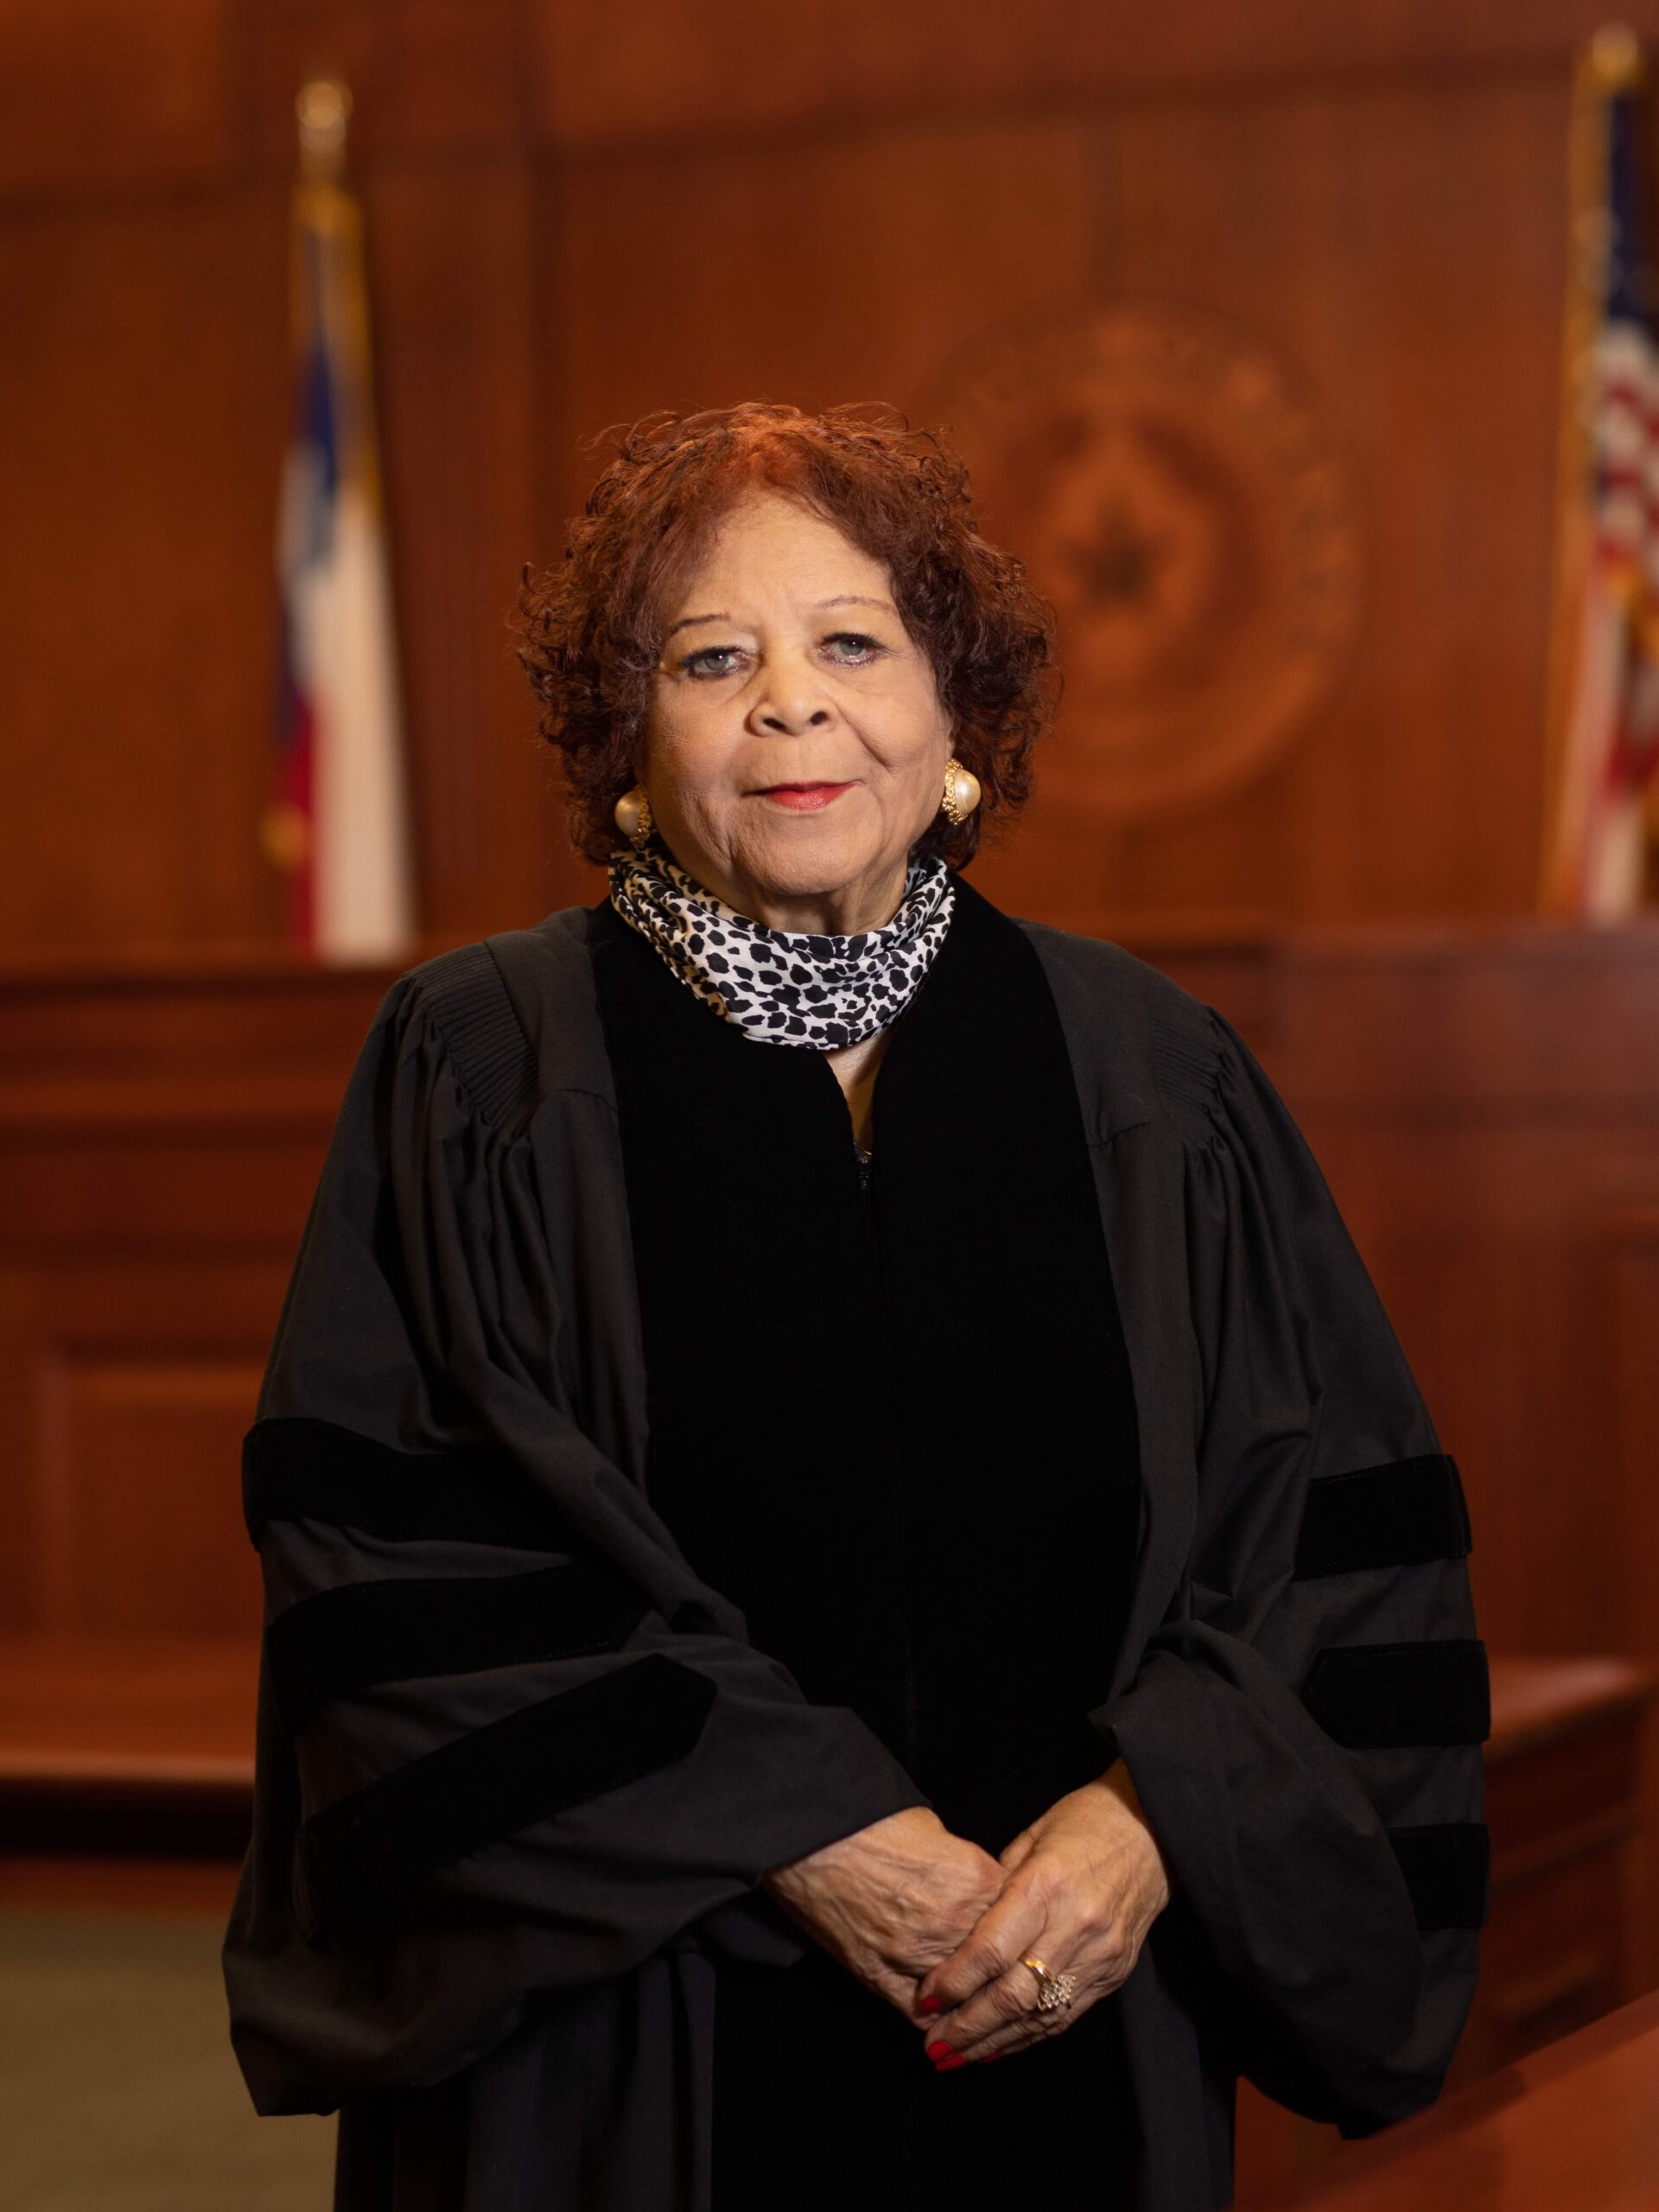 A portrait of Judge Harriet Murphy in her judicial robes, standing in the law school courtroom.